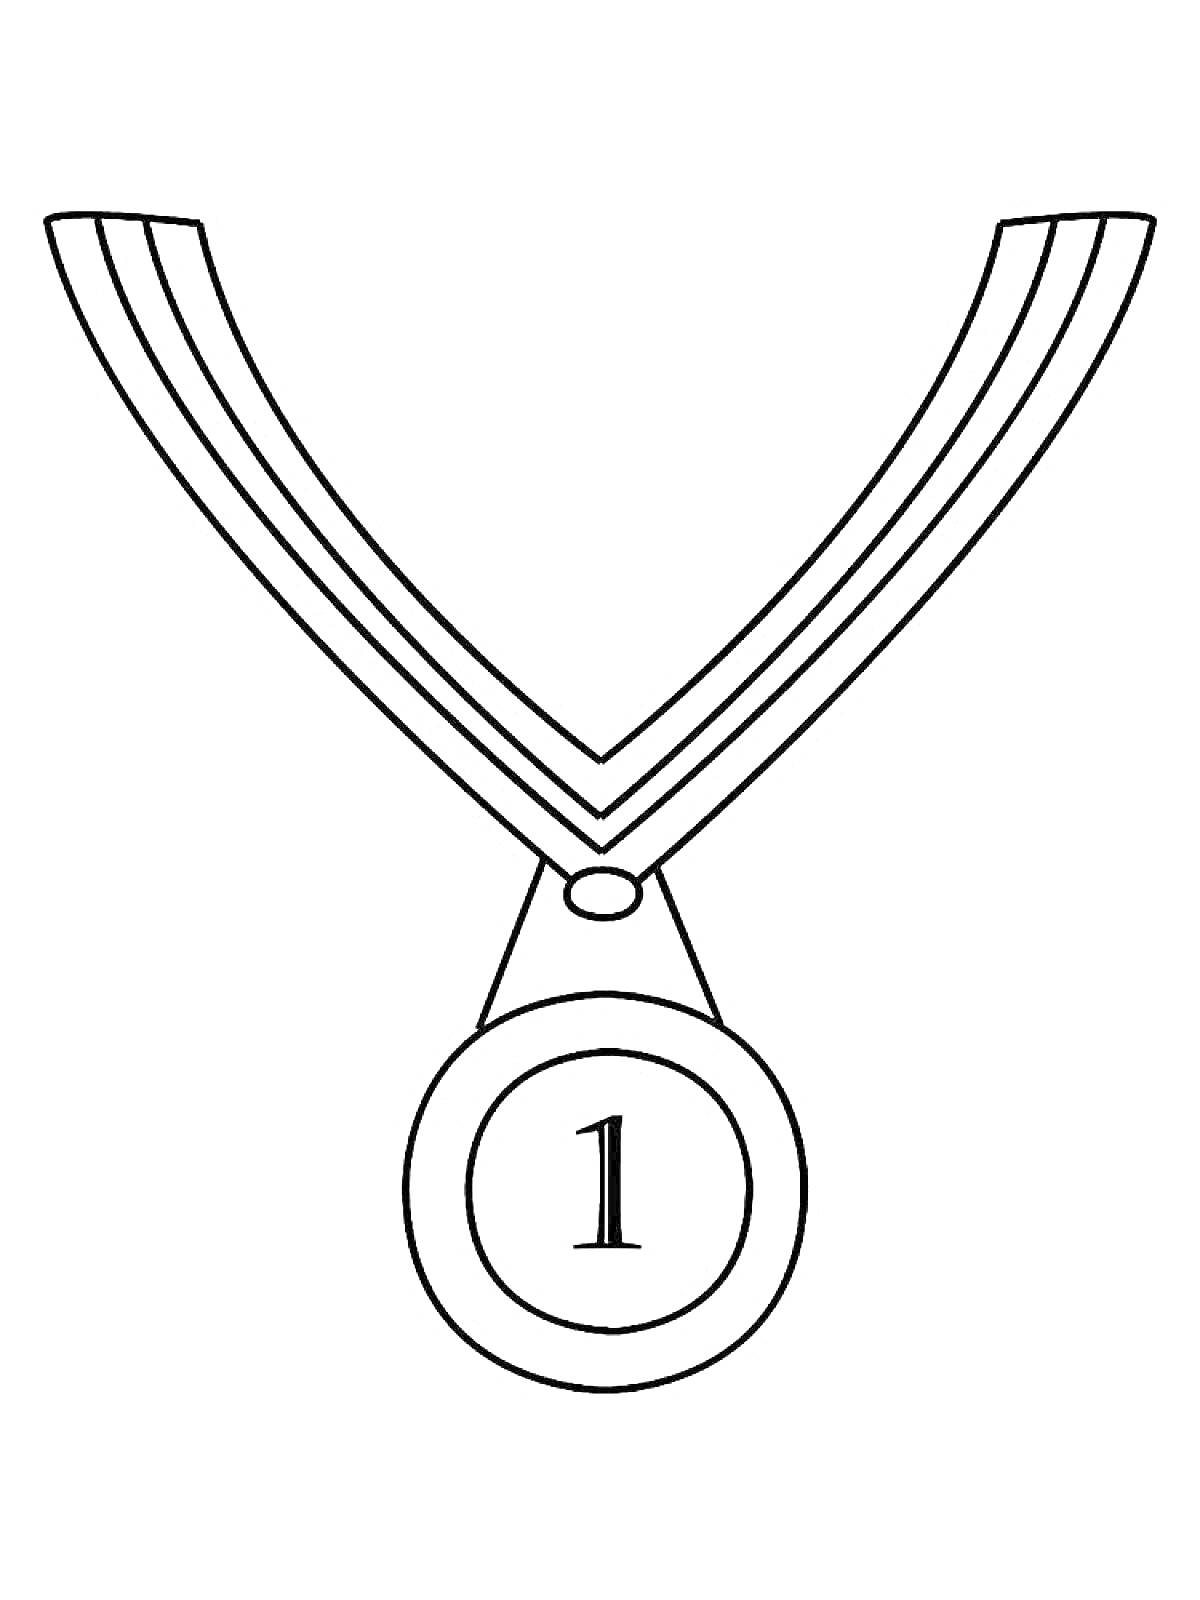 Раскраска Медаль с цифрой 1 на ленте